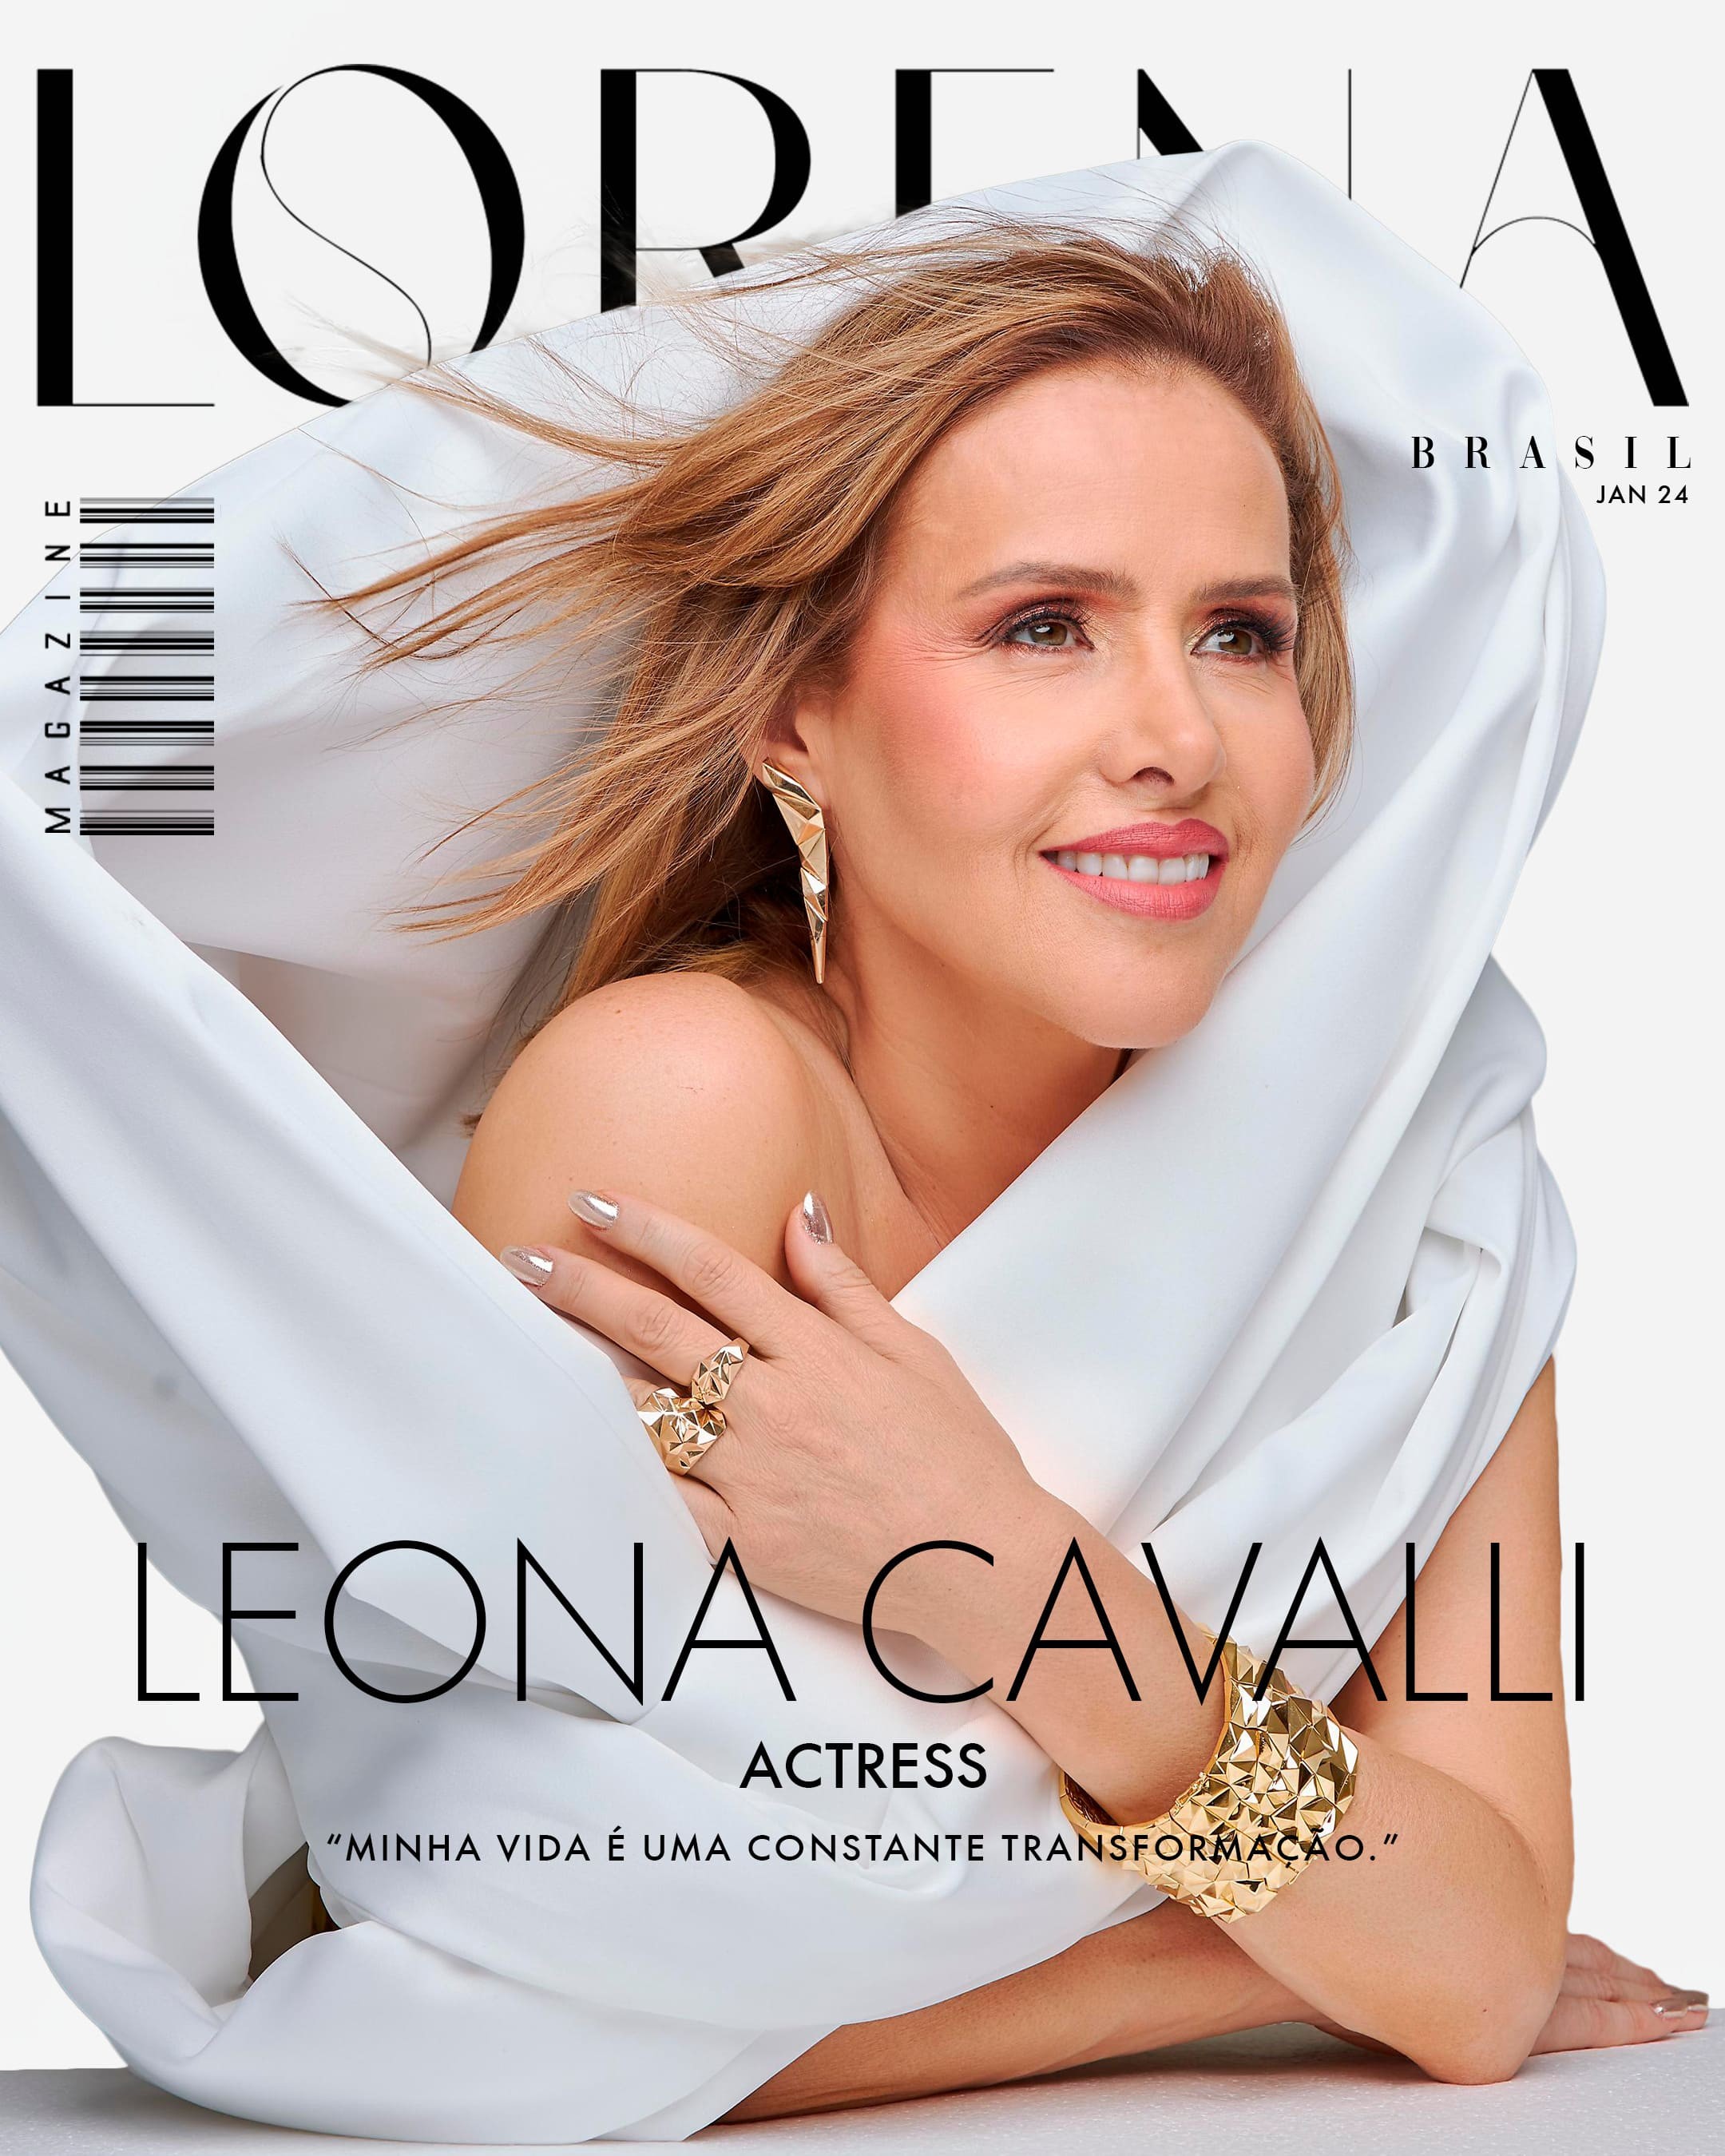 Leona Cavalli: 